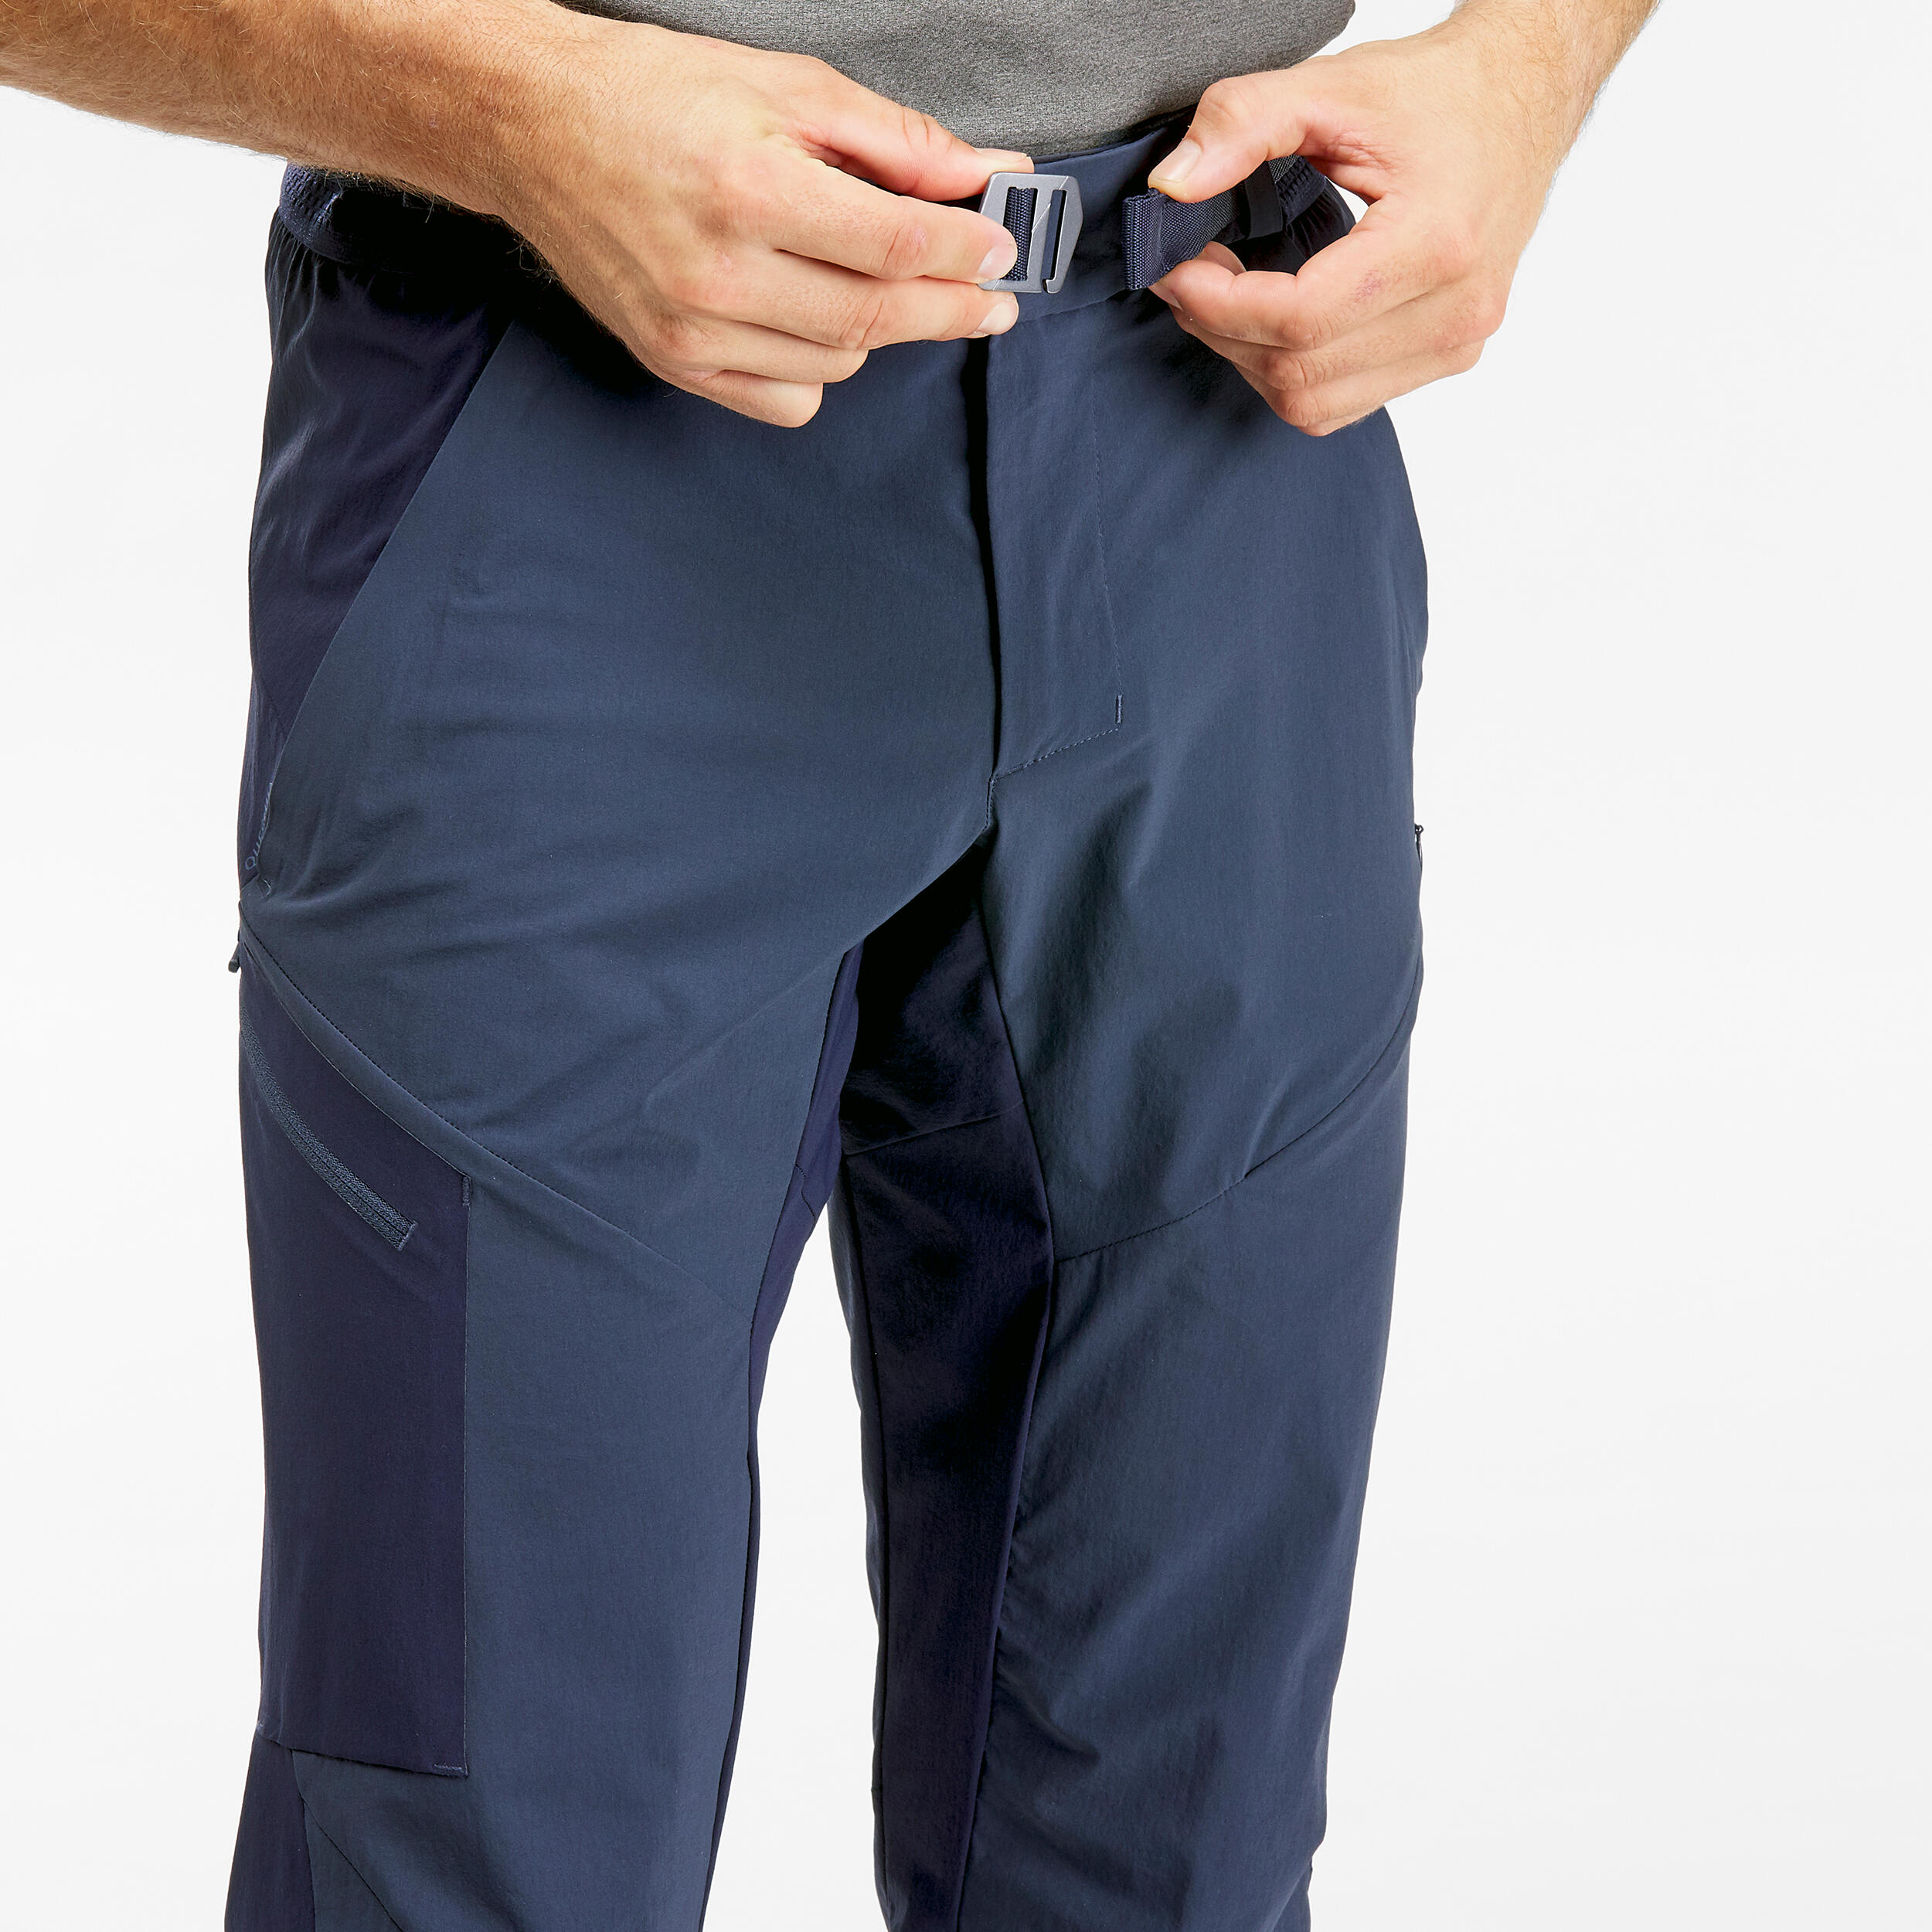 Buy Mens Hiking Trousers MH500 Online  Decathlon